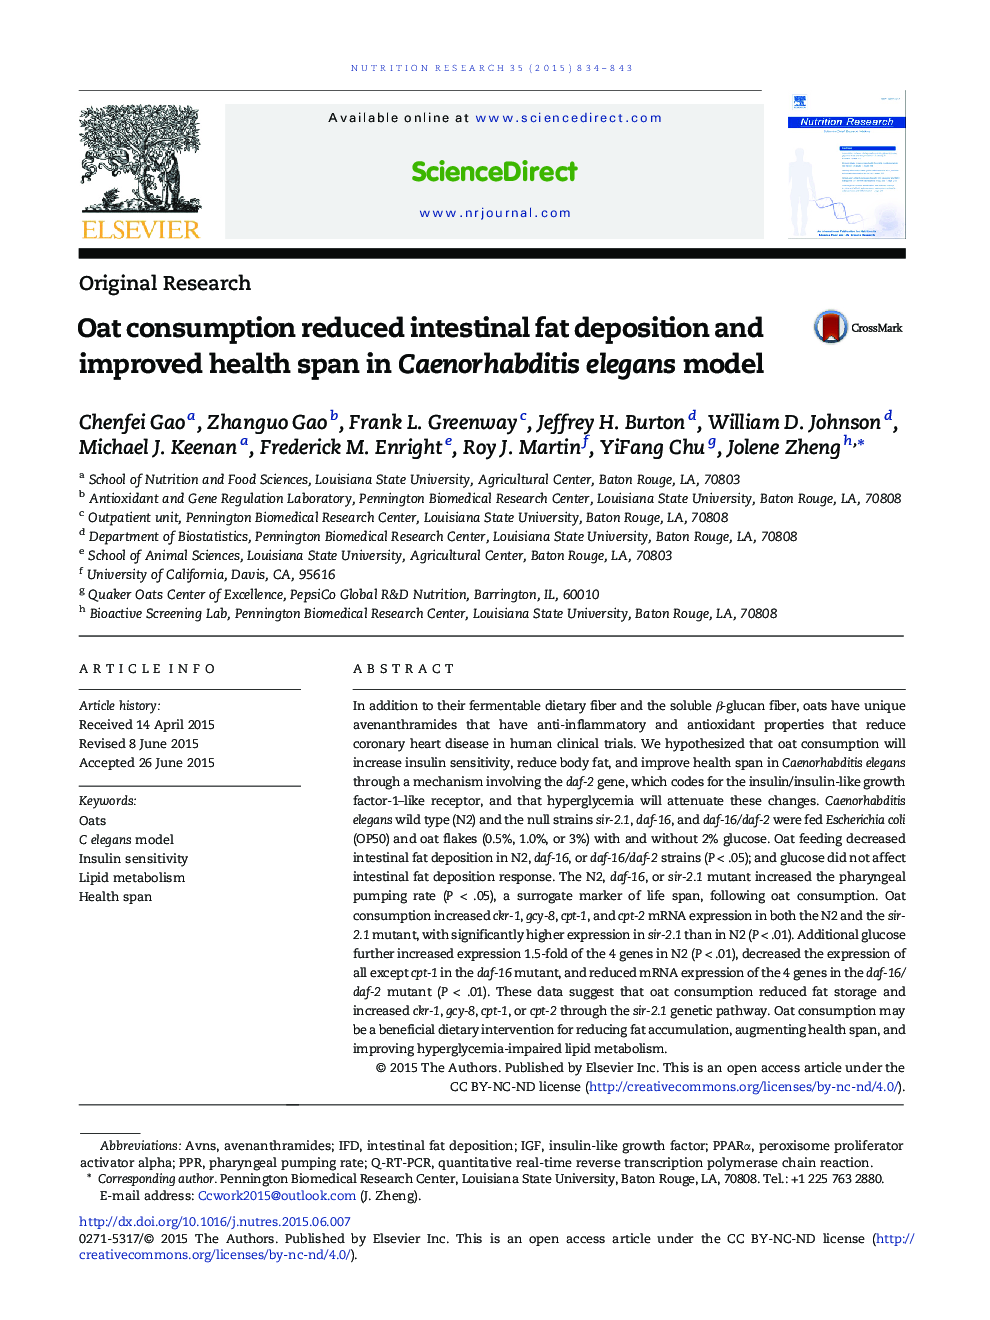 Original ResearchOat consumption reduced intestinal fat deposition and improved health span in Caenorhabditis elegans model